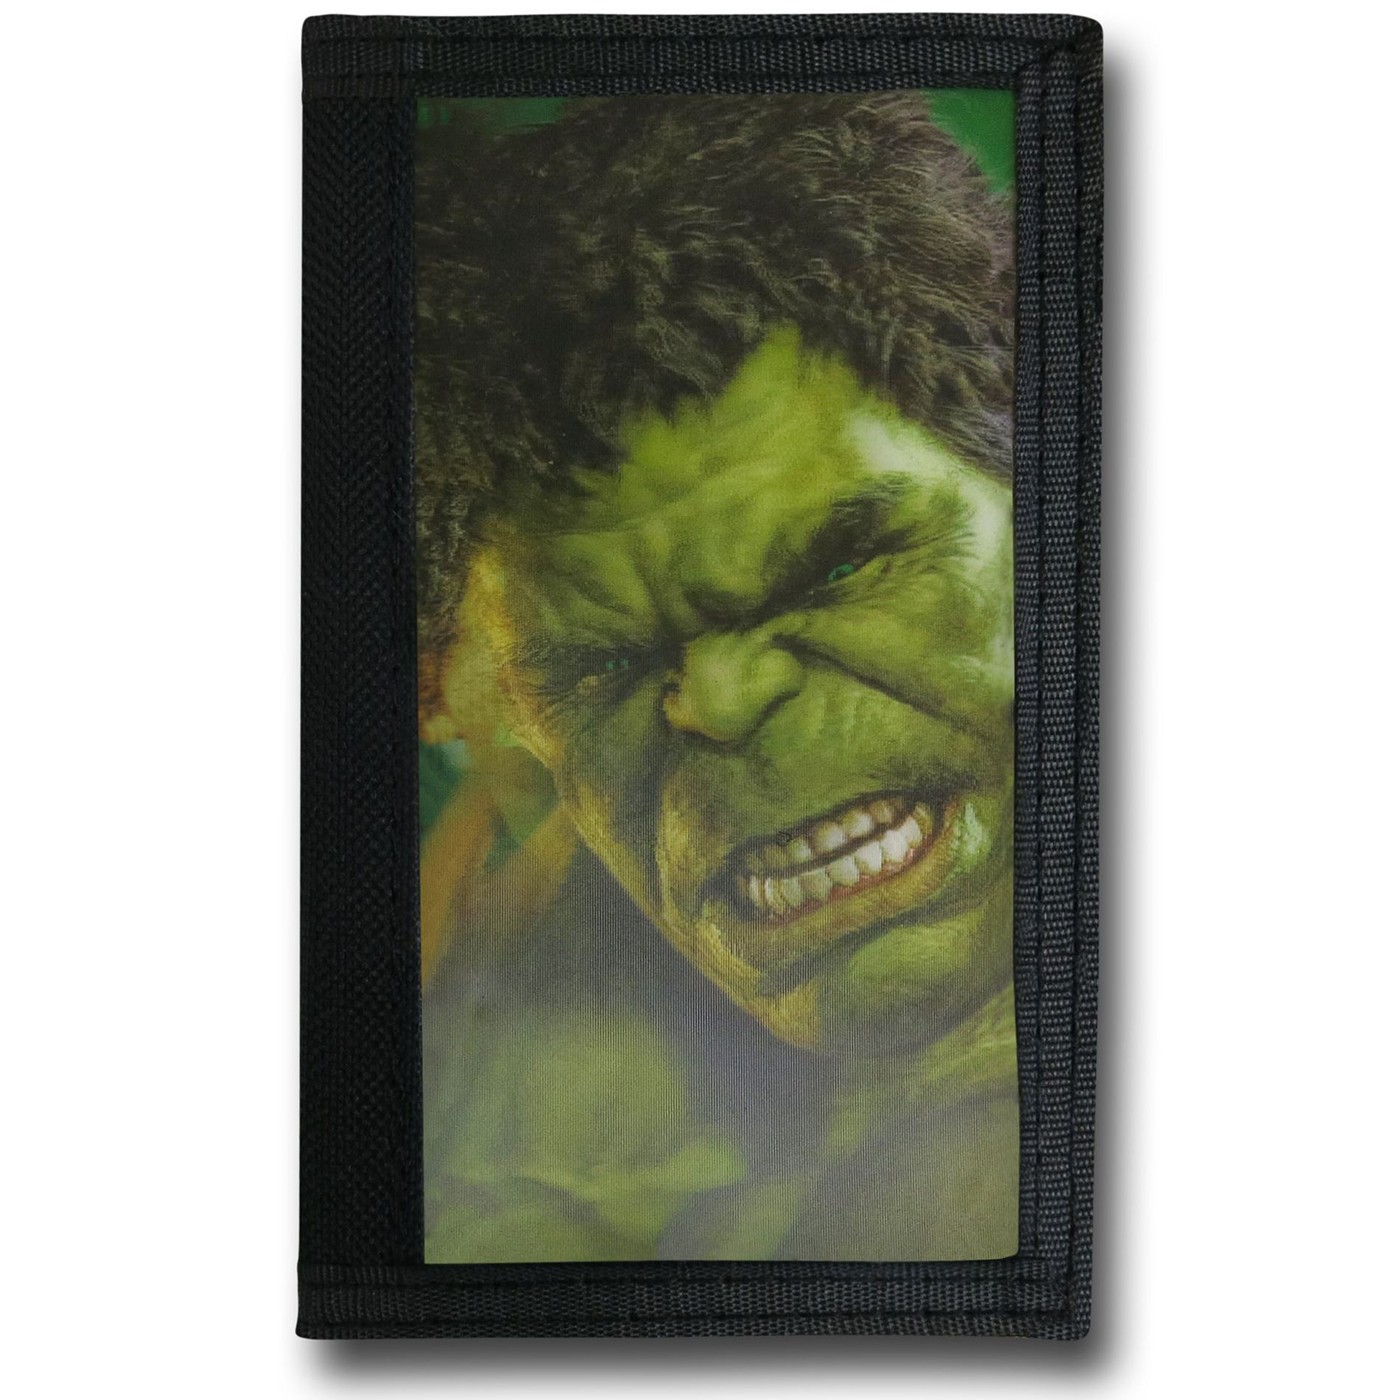 Incredible Hulk Age of Ultron Lenticular Velcro Wallet